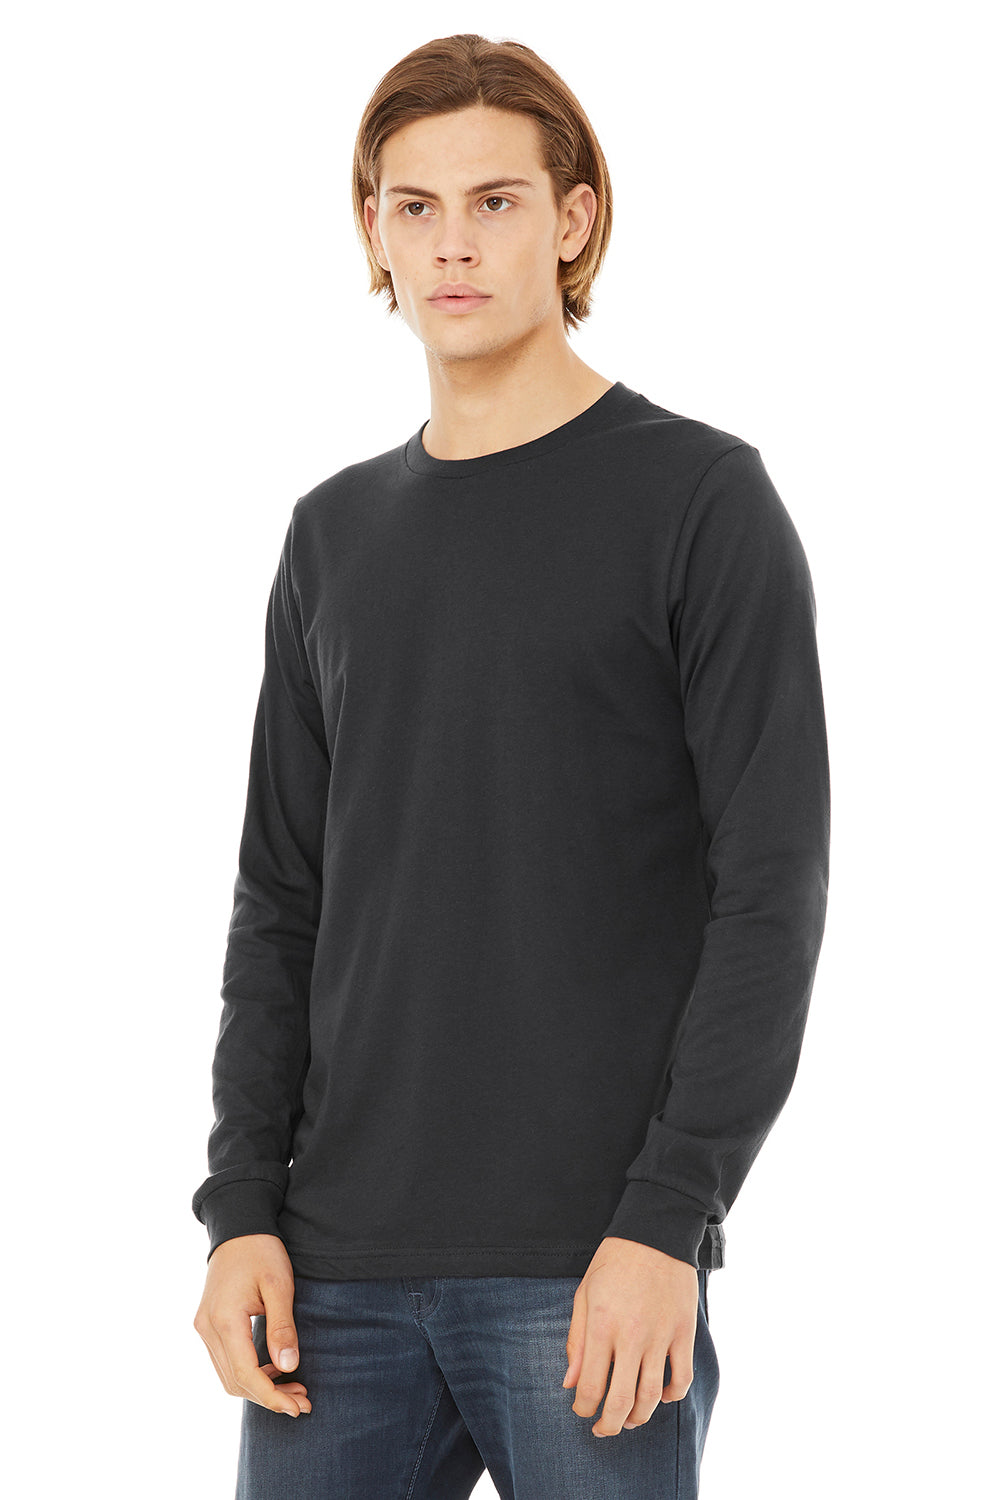 Bella + Canvas BC3501/3501 Mens Jersey Long Sleeve Crewneck T-Shirt Dark Grey Model 3Q